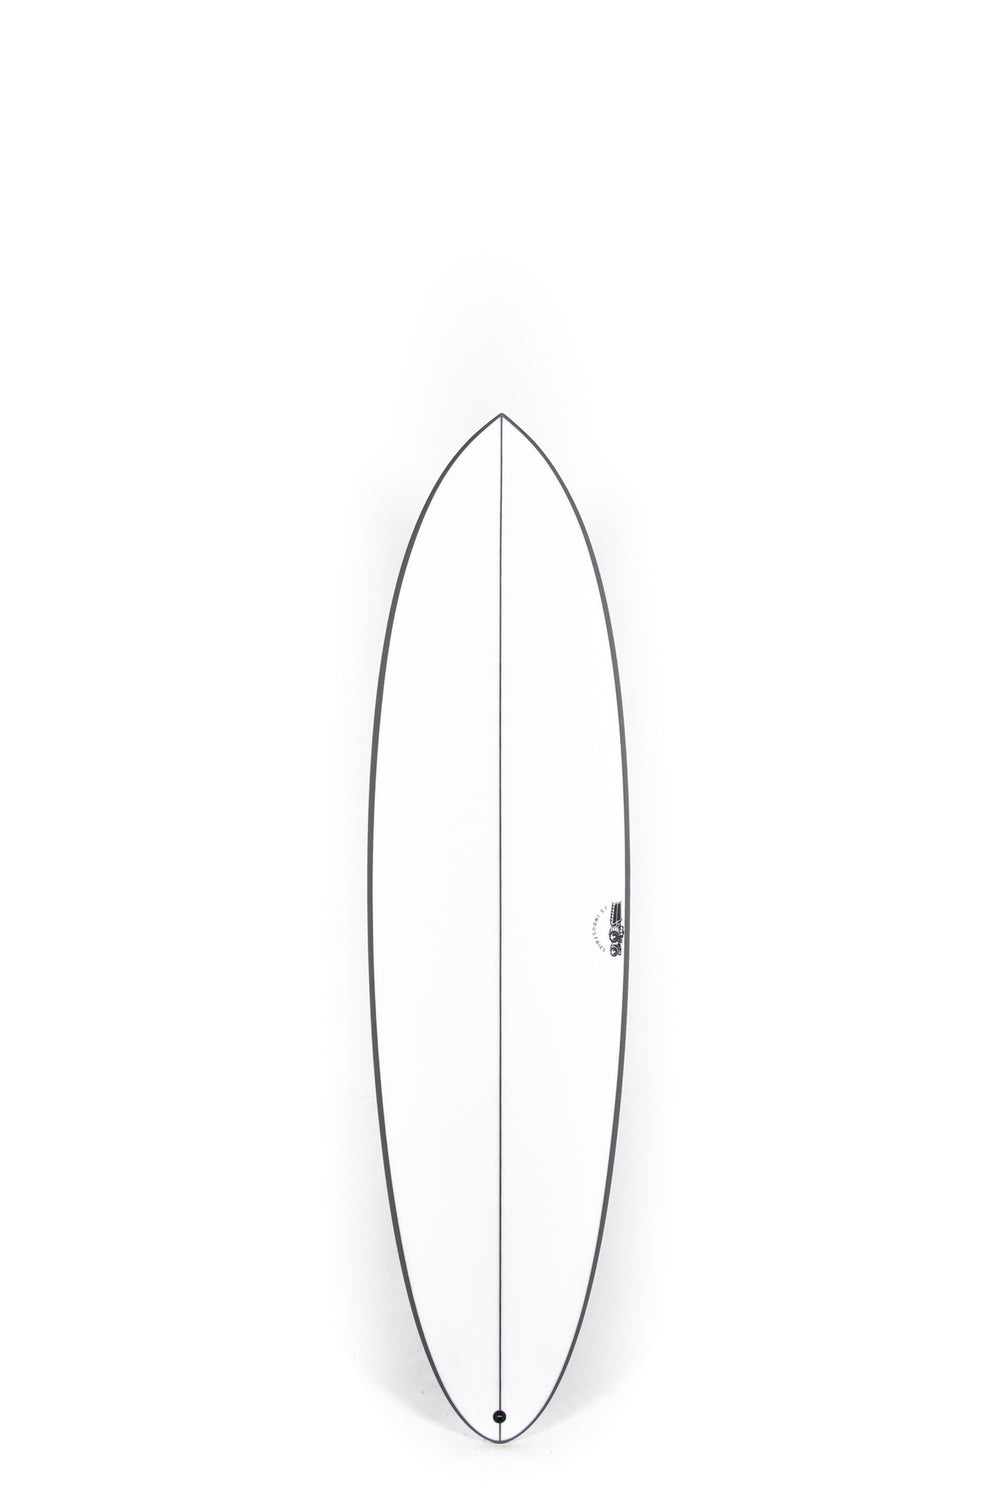 Pukas Surf Shop - JS Surfboards - EL BARON - 6'8